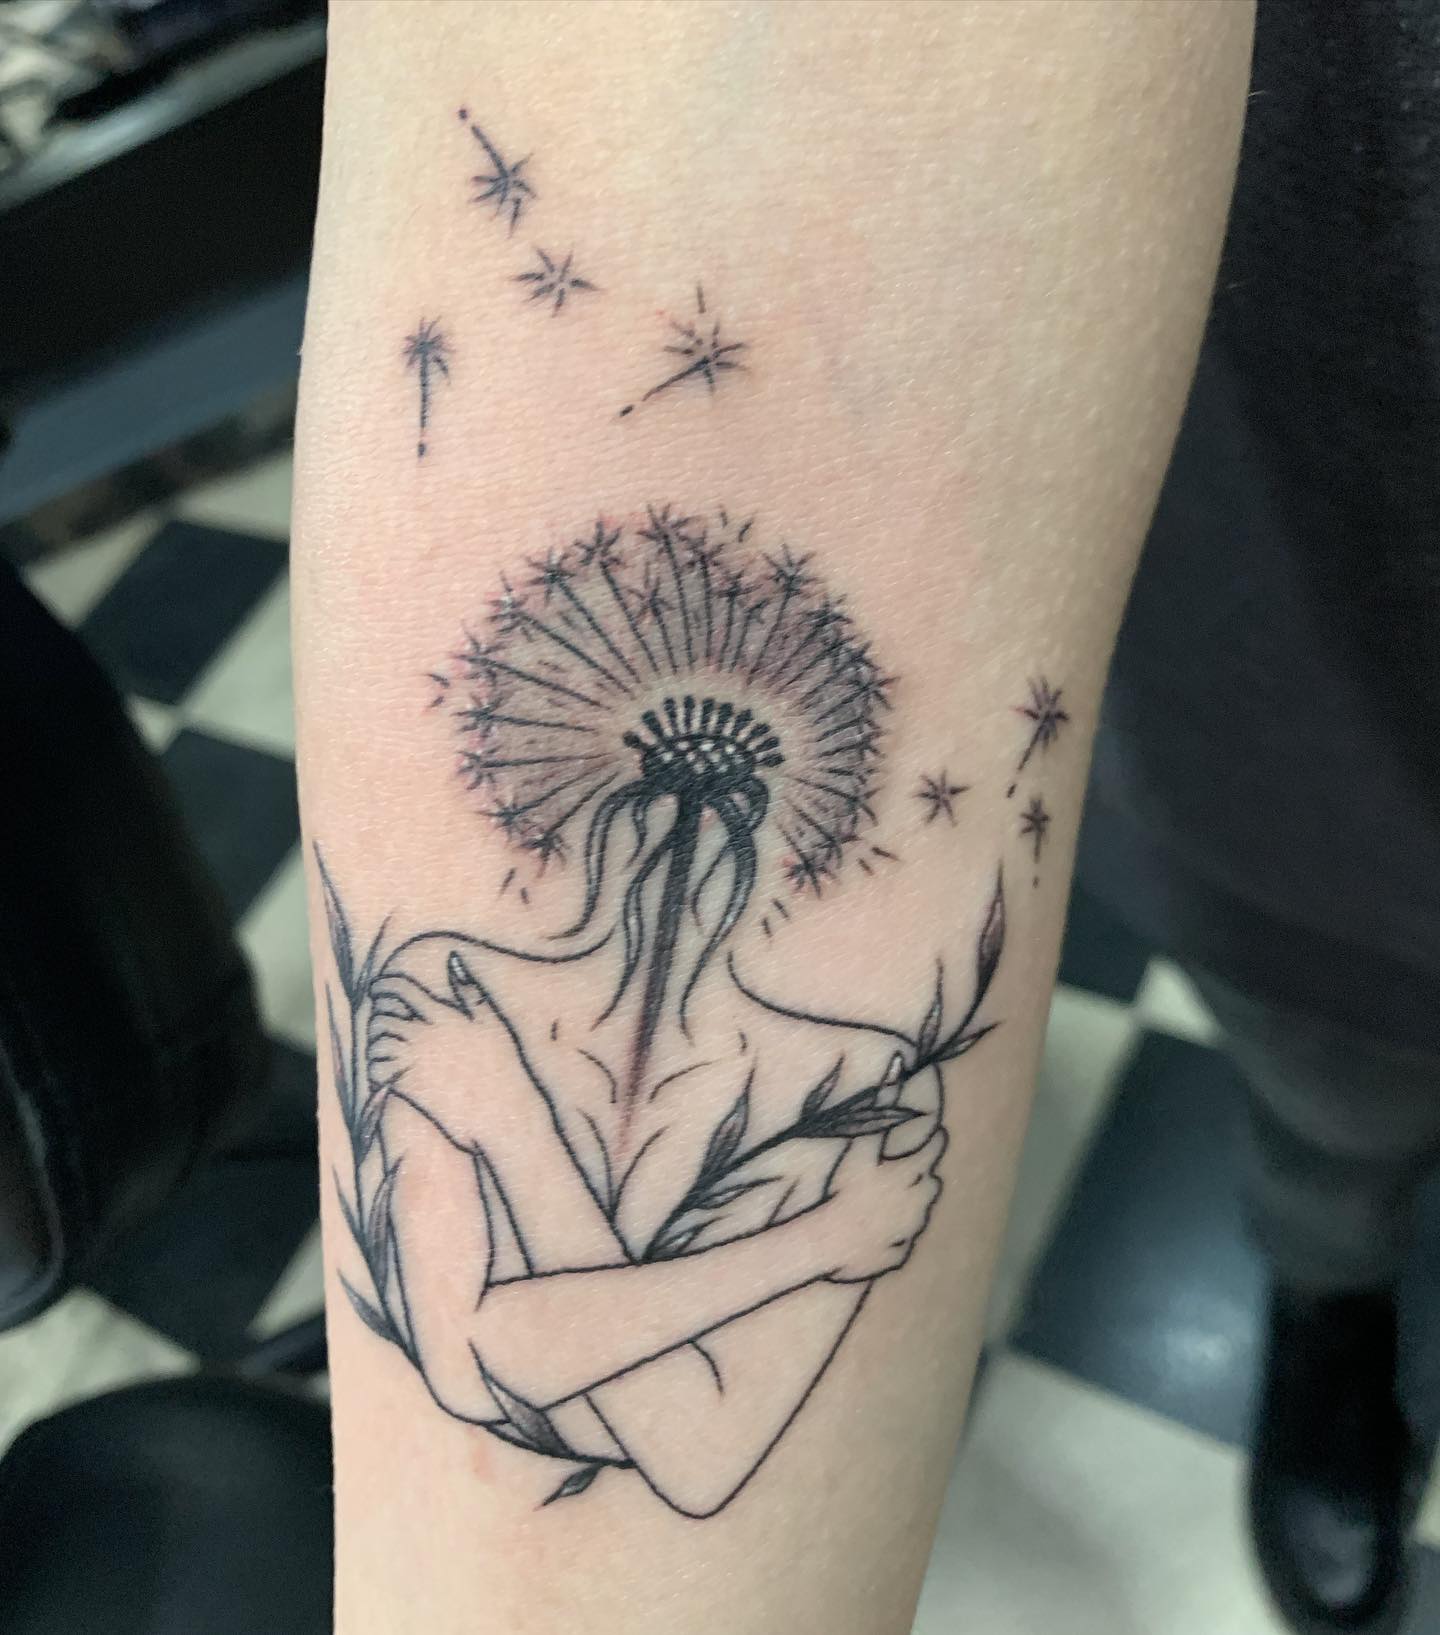 Dandelion seed tattoo located on the wrist, fine line